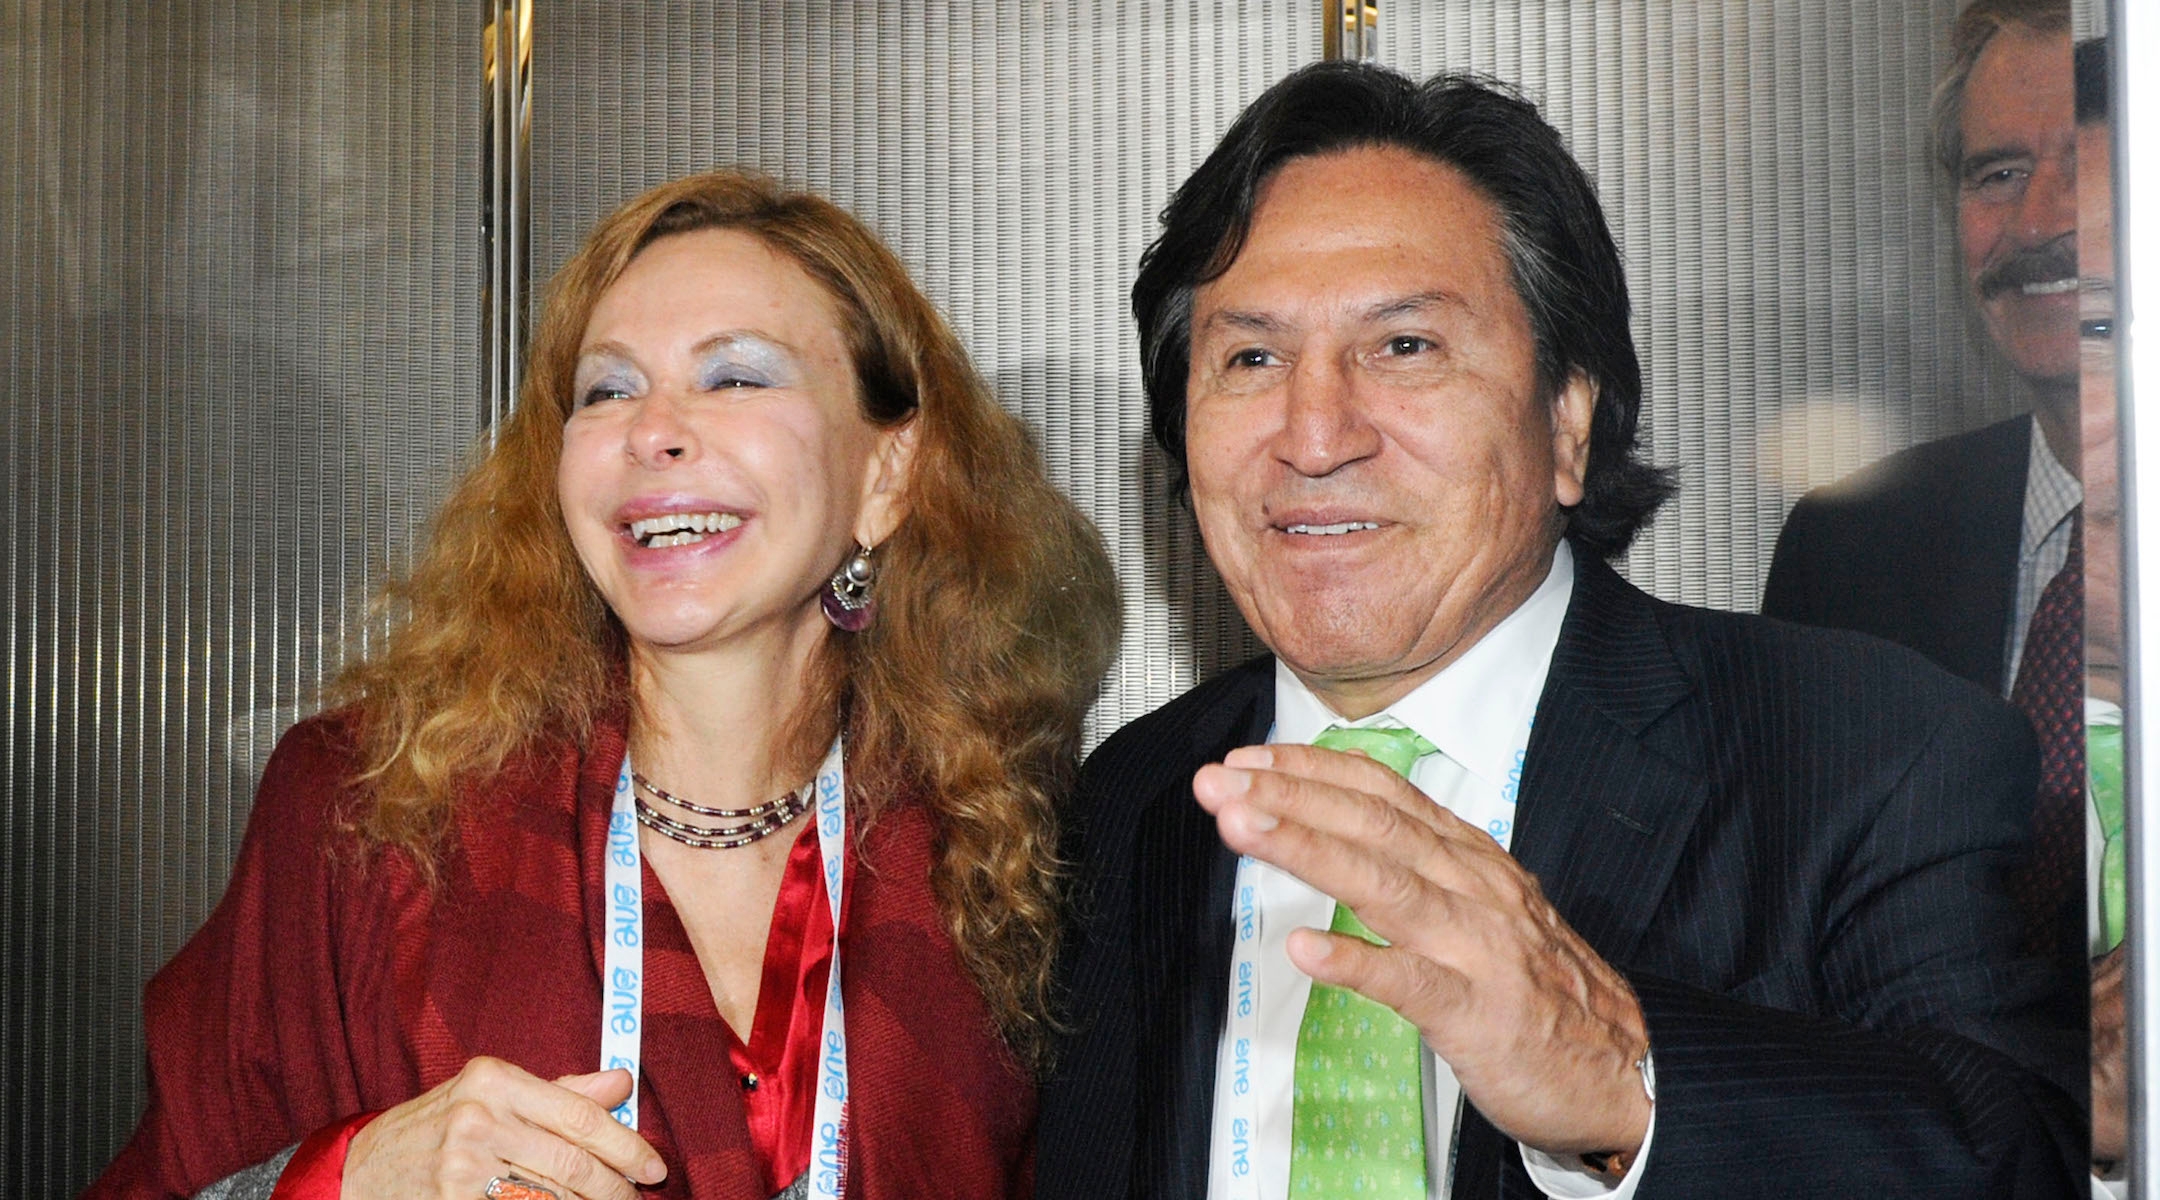 Eliane Karp, left, with her husband, former Peruvian President Alejandro Toledo, at a convention in Dublin, Ireland, Oct. 16, 2014. (Clodagh Kilcoyne/Getty Images)